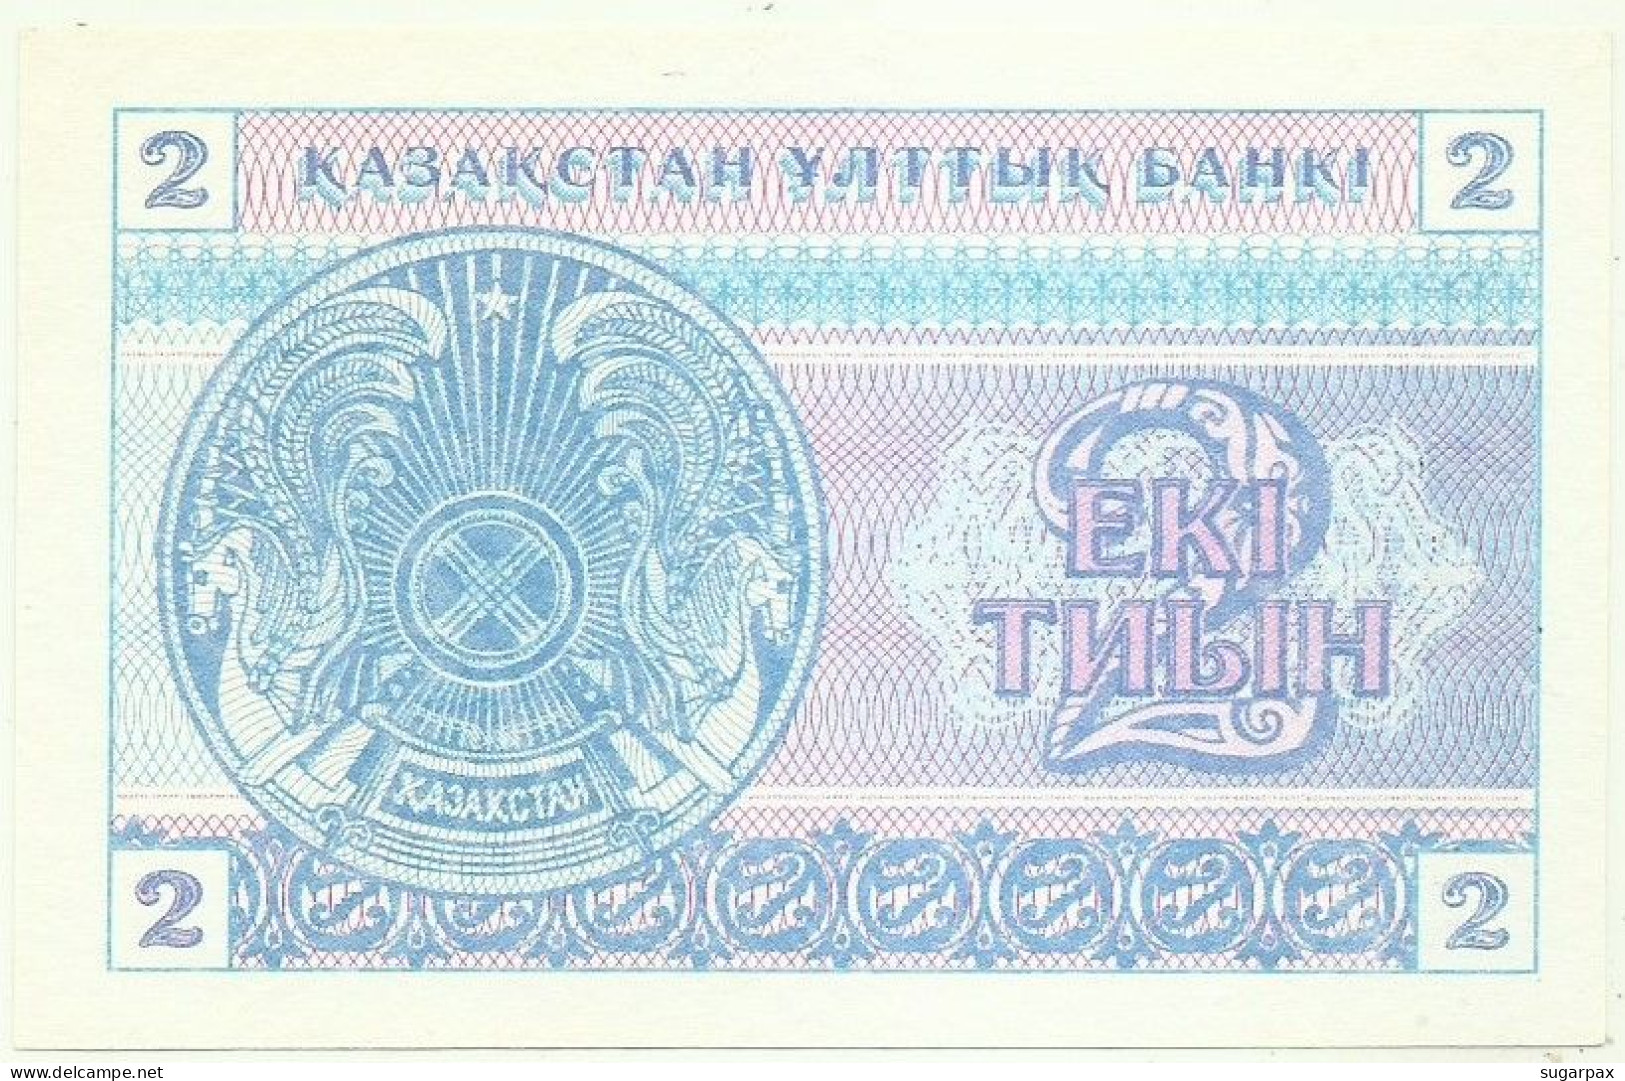 KAZAKHSTAN - 2 Tyin 1993 - Pick 2.d - Unc. - UPPER Serial # Position - Wmk Snowflake Pattern - Kazakhstán